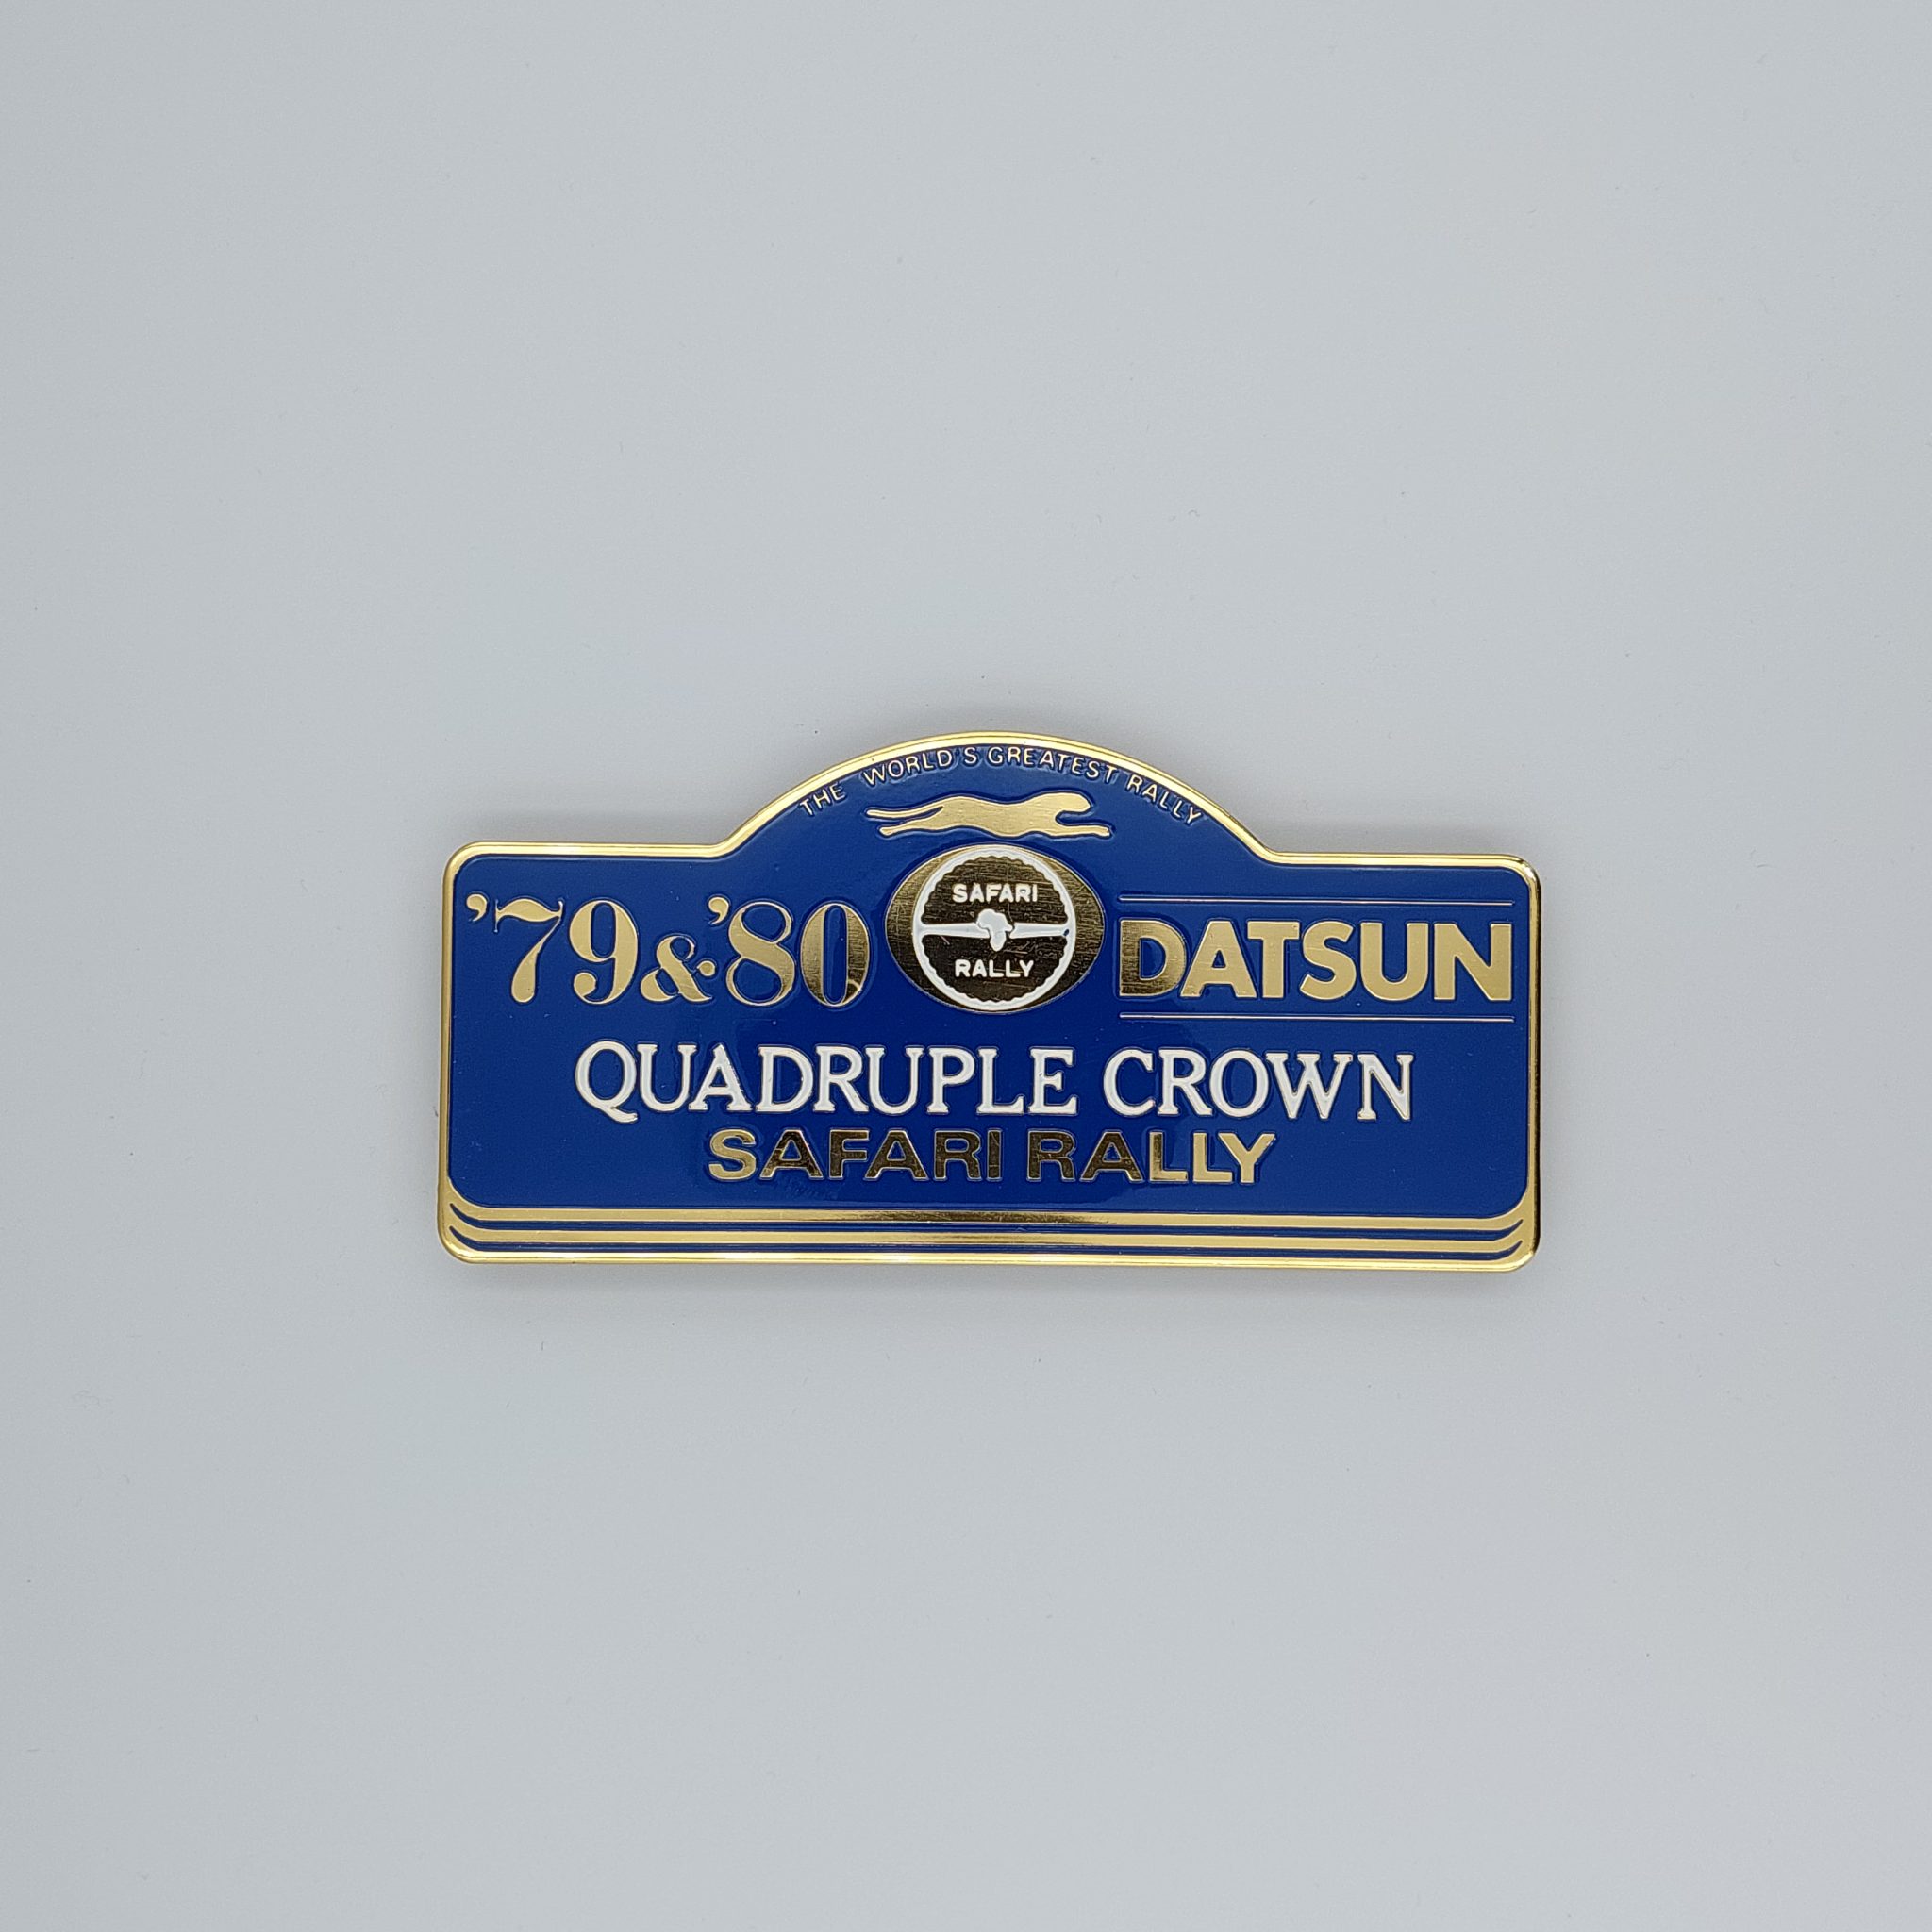 Quadruple Crown badge